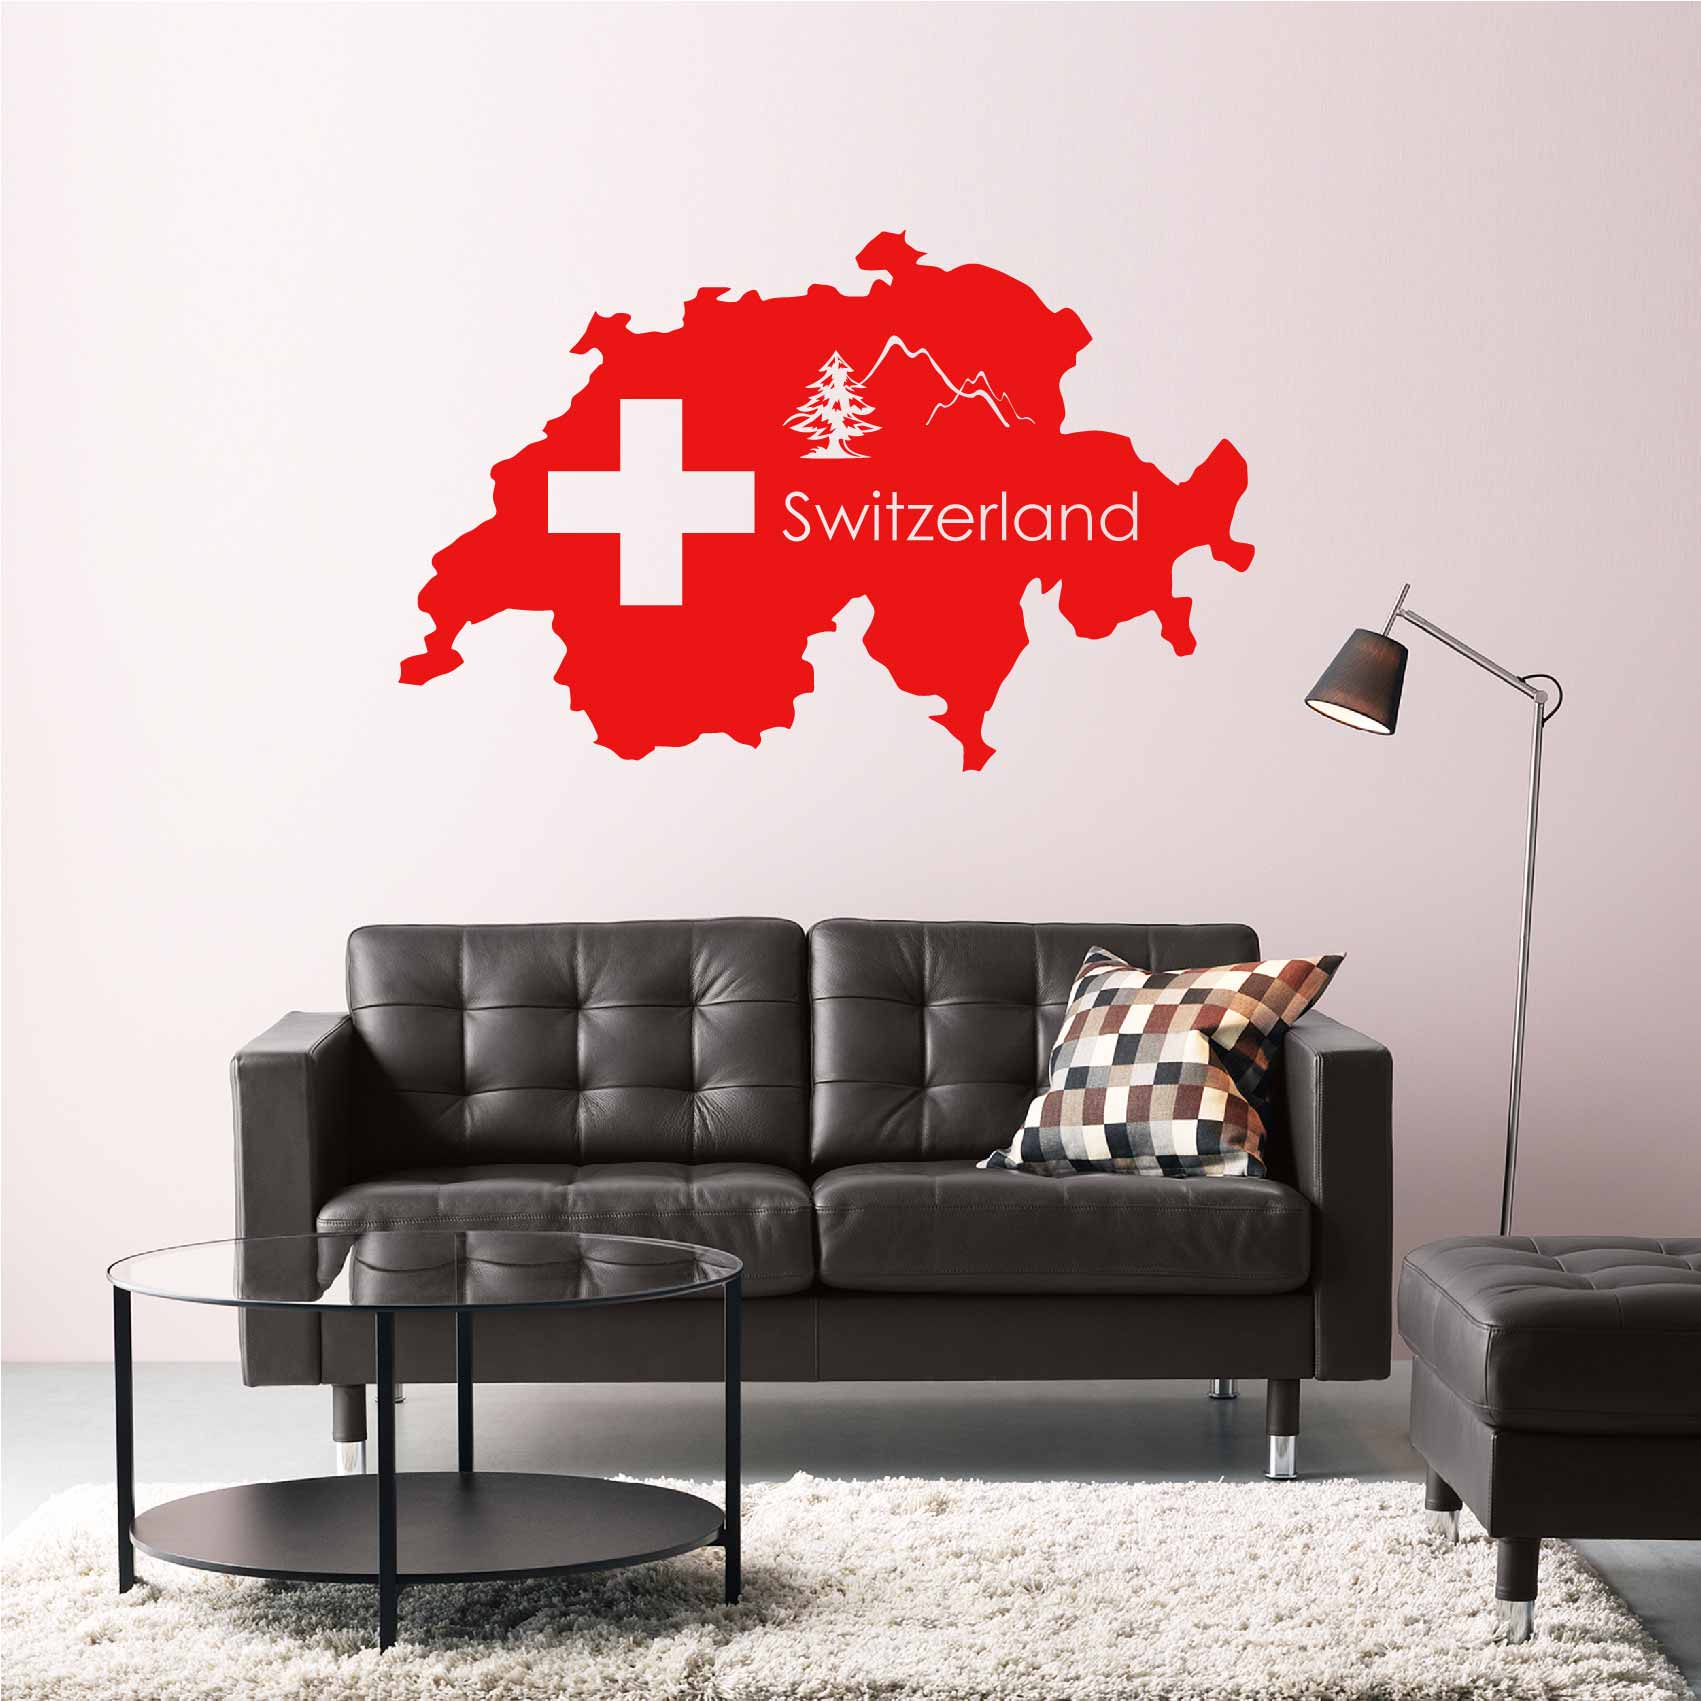 stickers-suisse-ref13pays-stickers-muraux-suisse-carte-autocollant-deco-chambre-salon-sticker-mural-switzerland